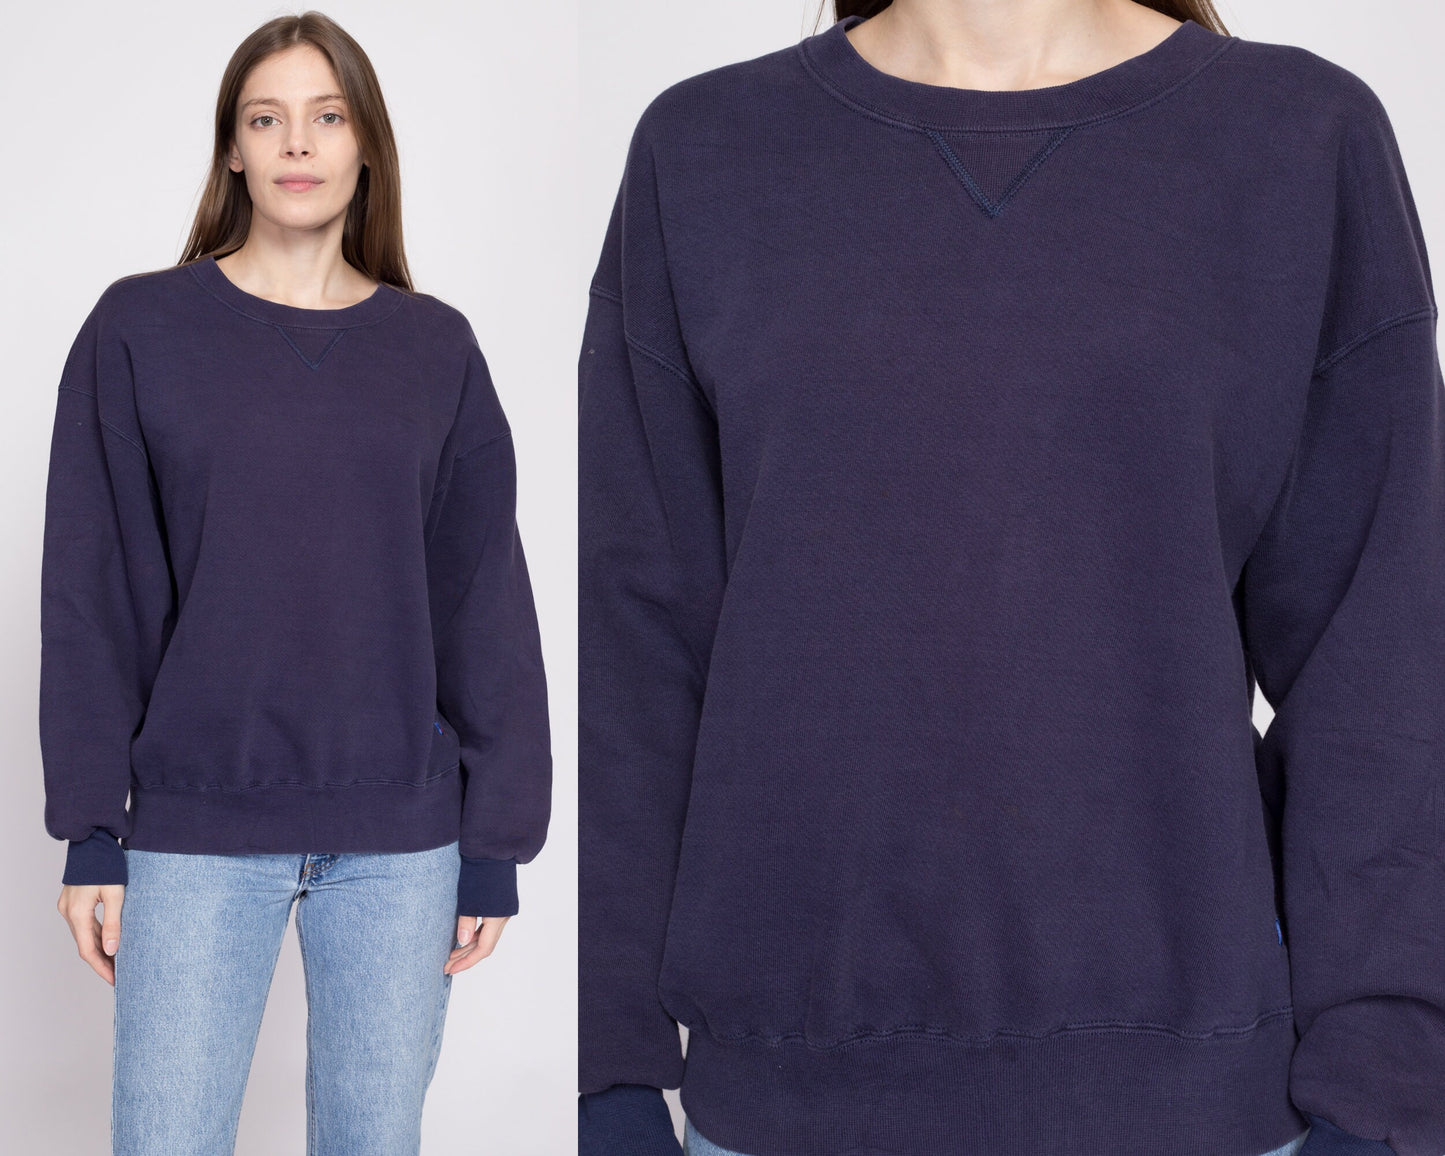 90s L.L. Bean x Russell Athletic Navy Blue V Stitch Sweatshirt - Men's Large | Vintage Unisex Plain Cotton Blend Blank Crewneck Pullover